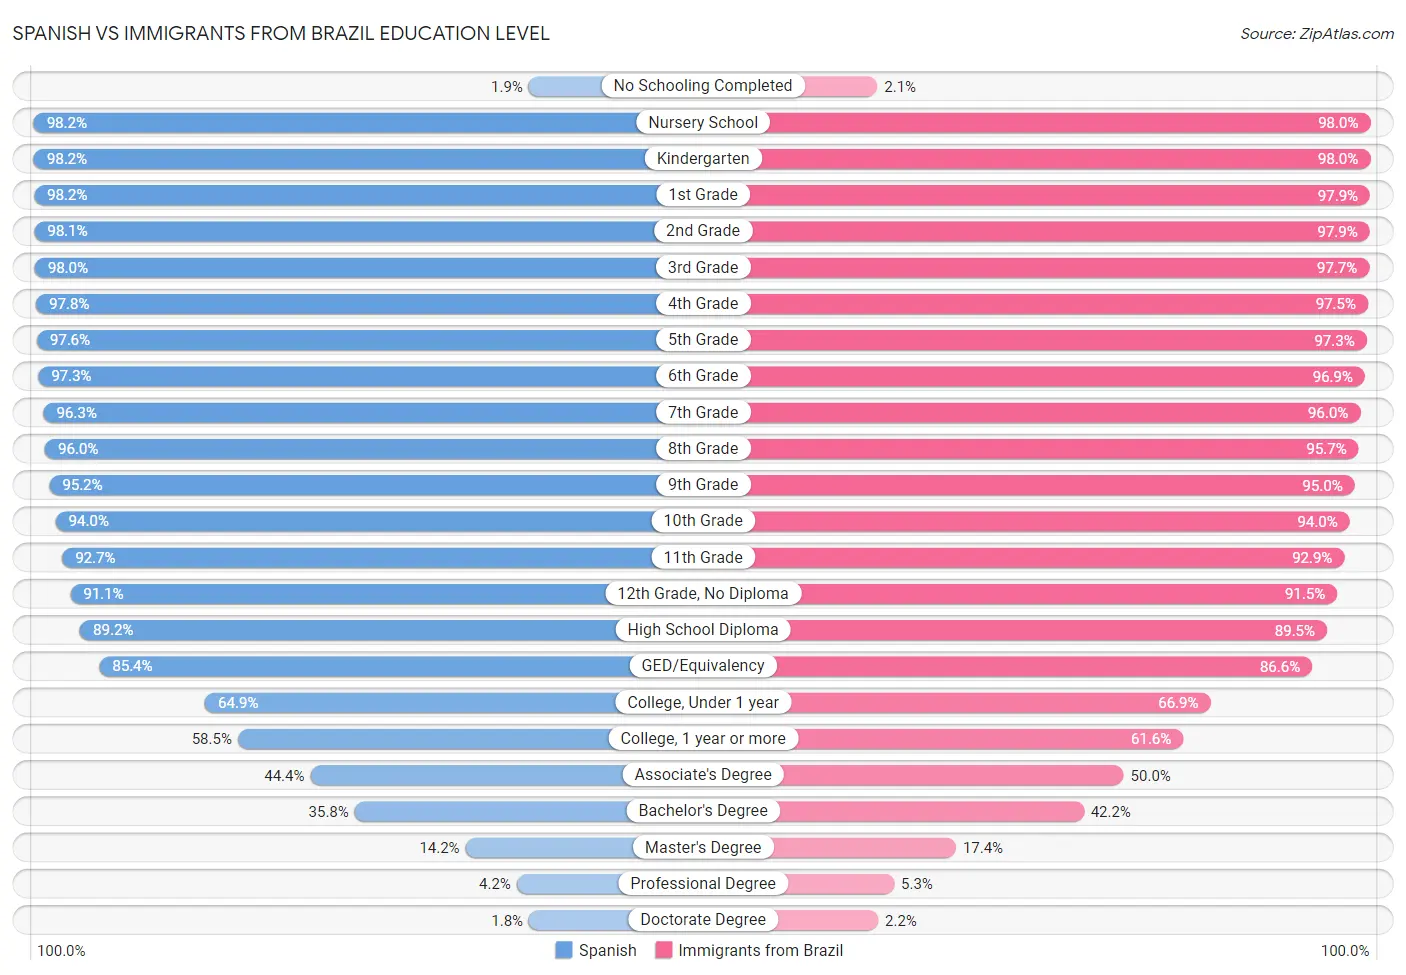 Spanish vs Immigrants from Brazil Education Level